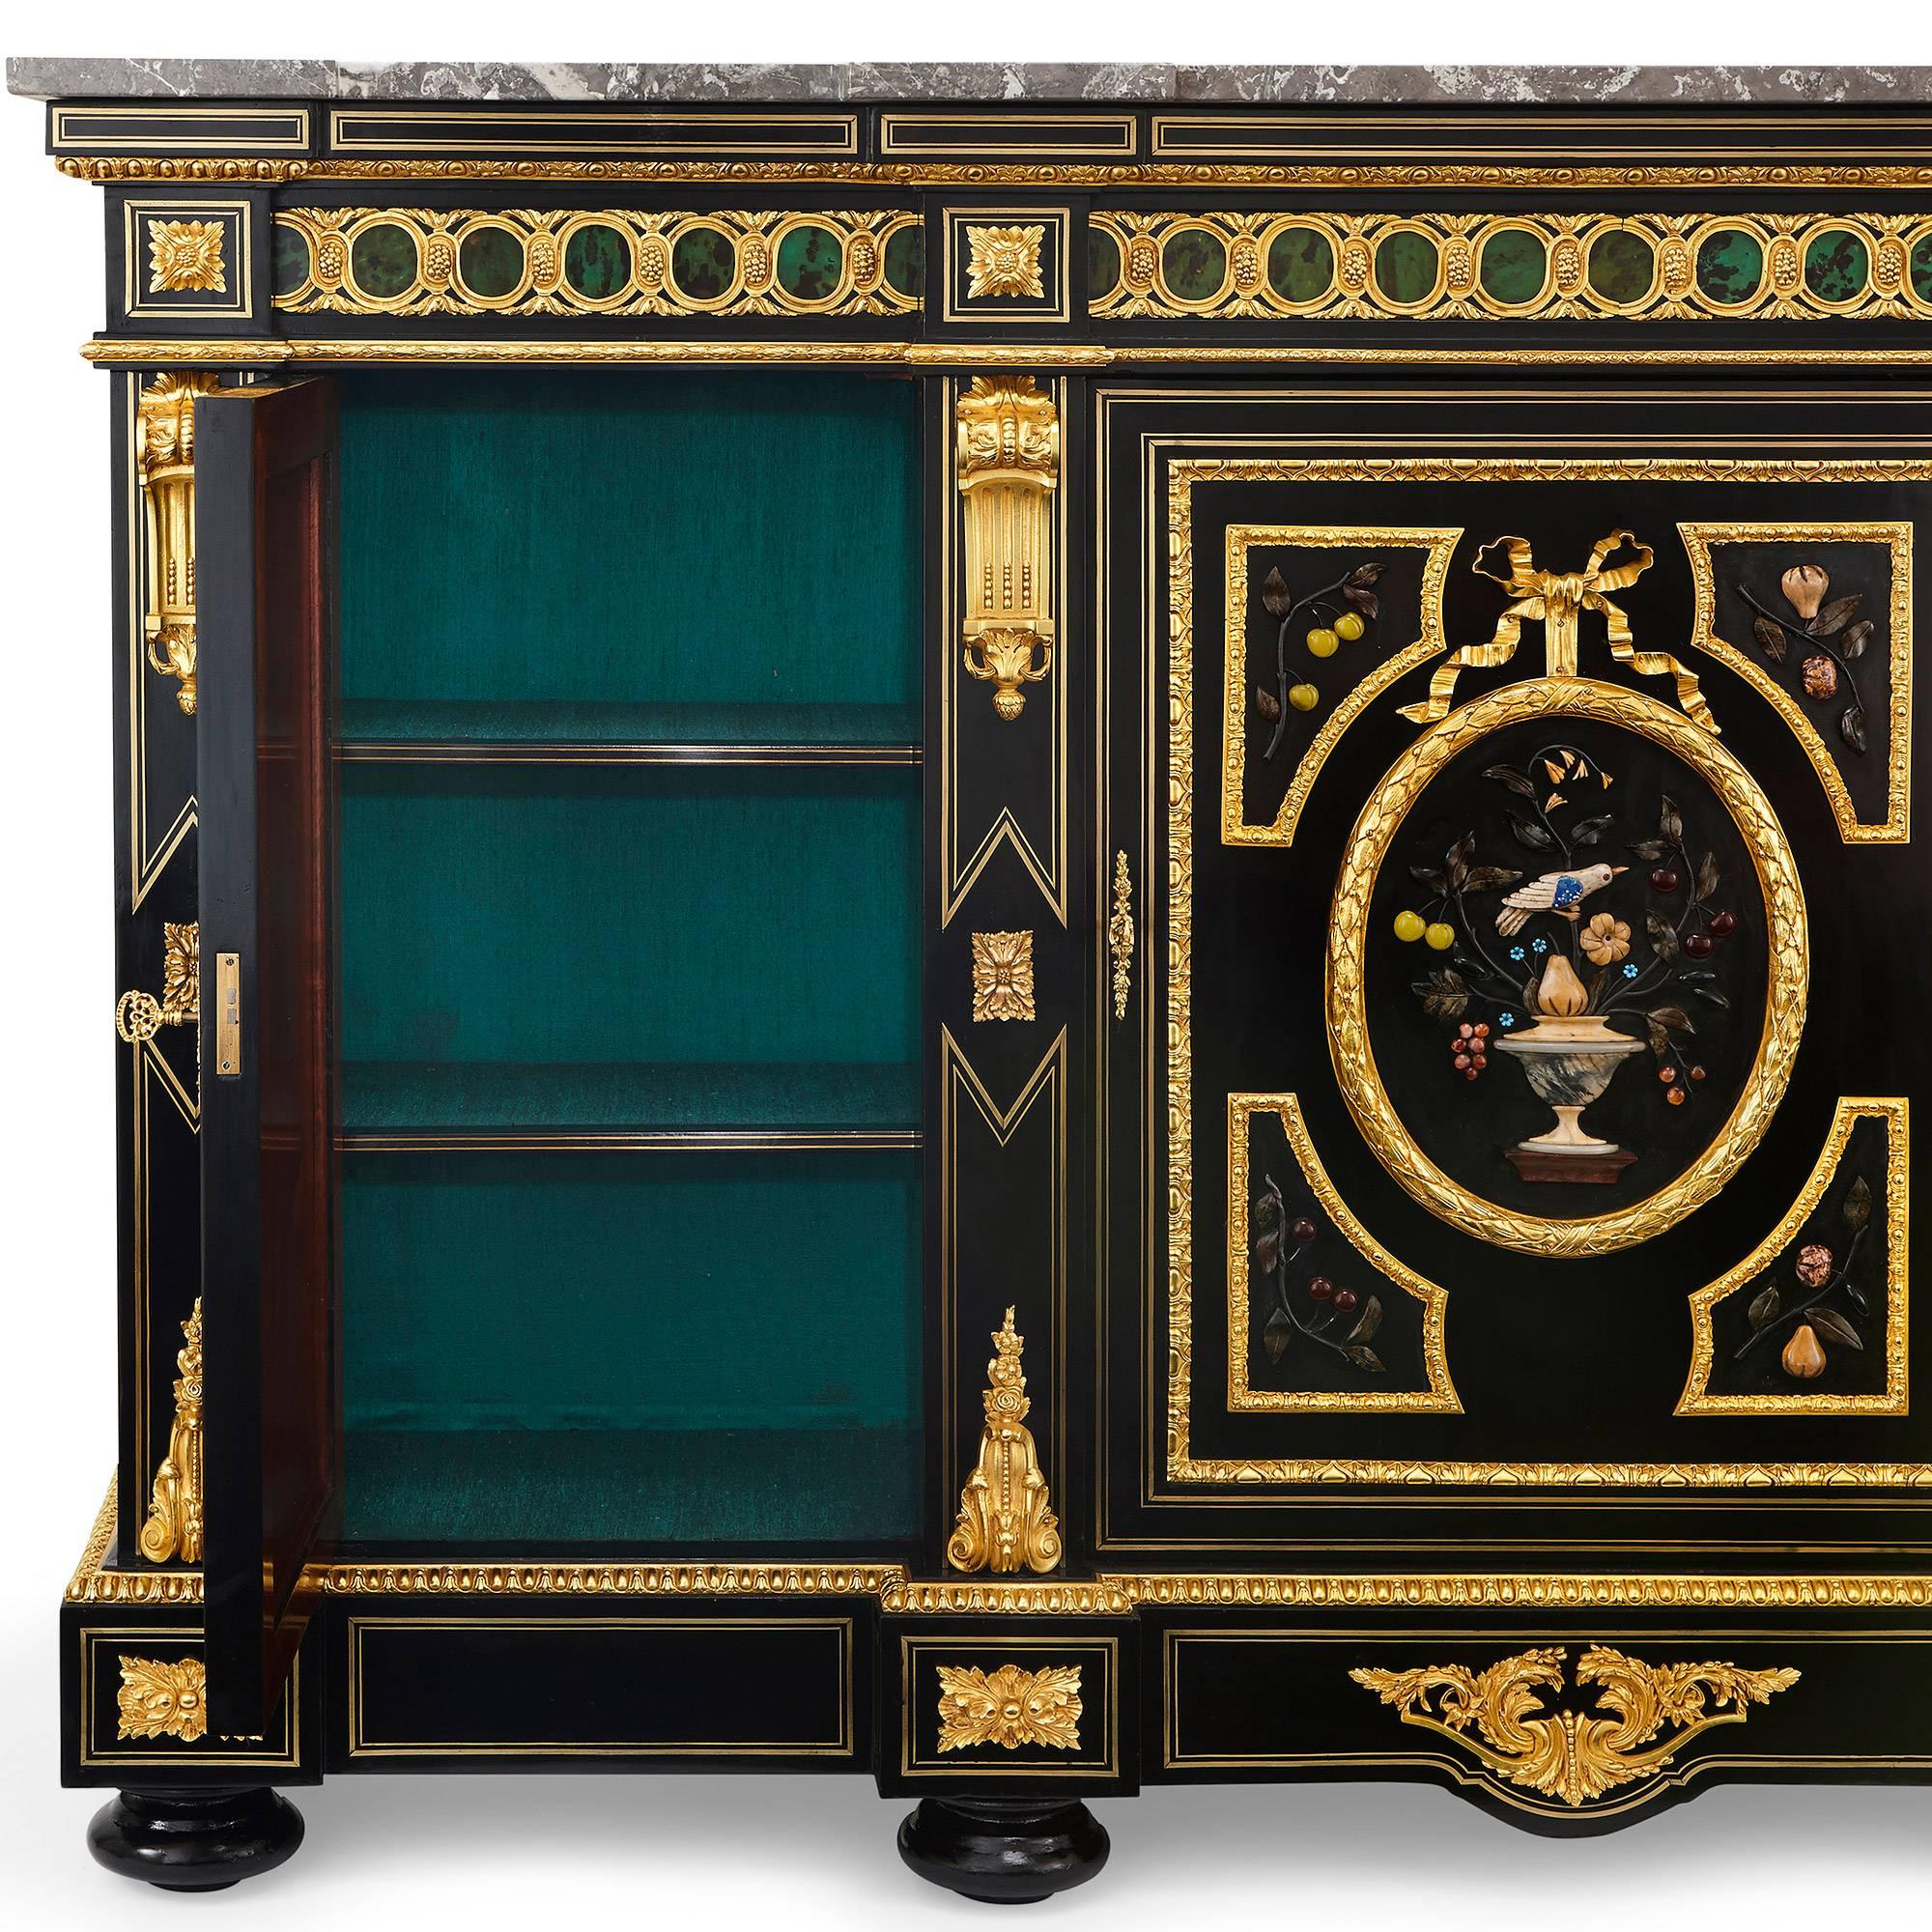 19th Century Napoleon III Period Marble, Hardstone, Ebonized Wood and Ormolu-Mounted Cabinet